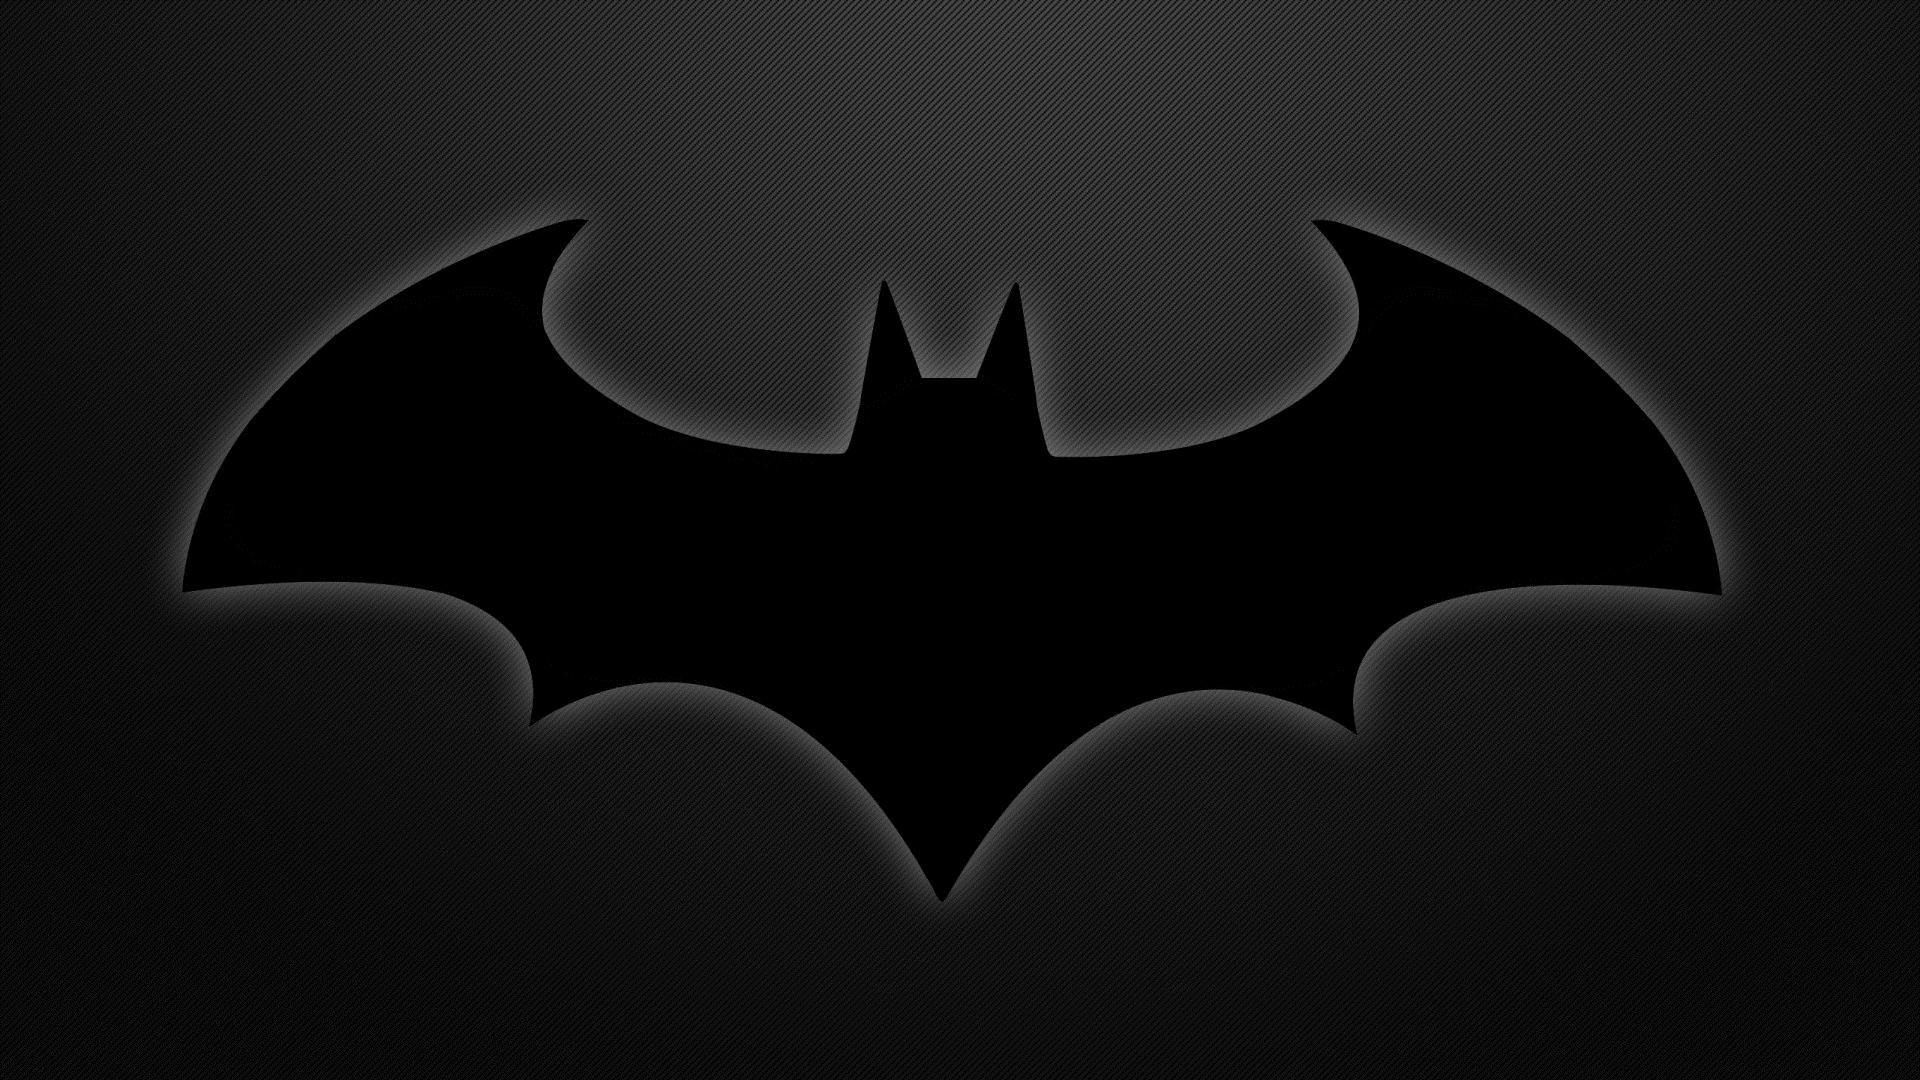 Free Batman Logo Jpg, Download Free Clip Art, Free Clip Art